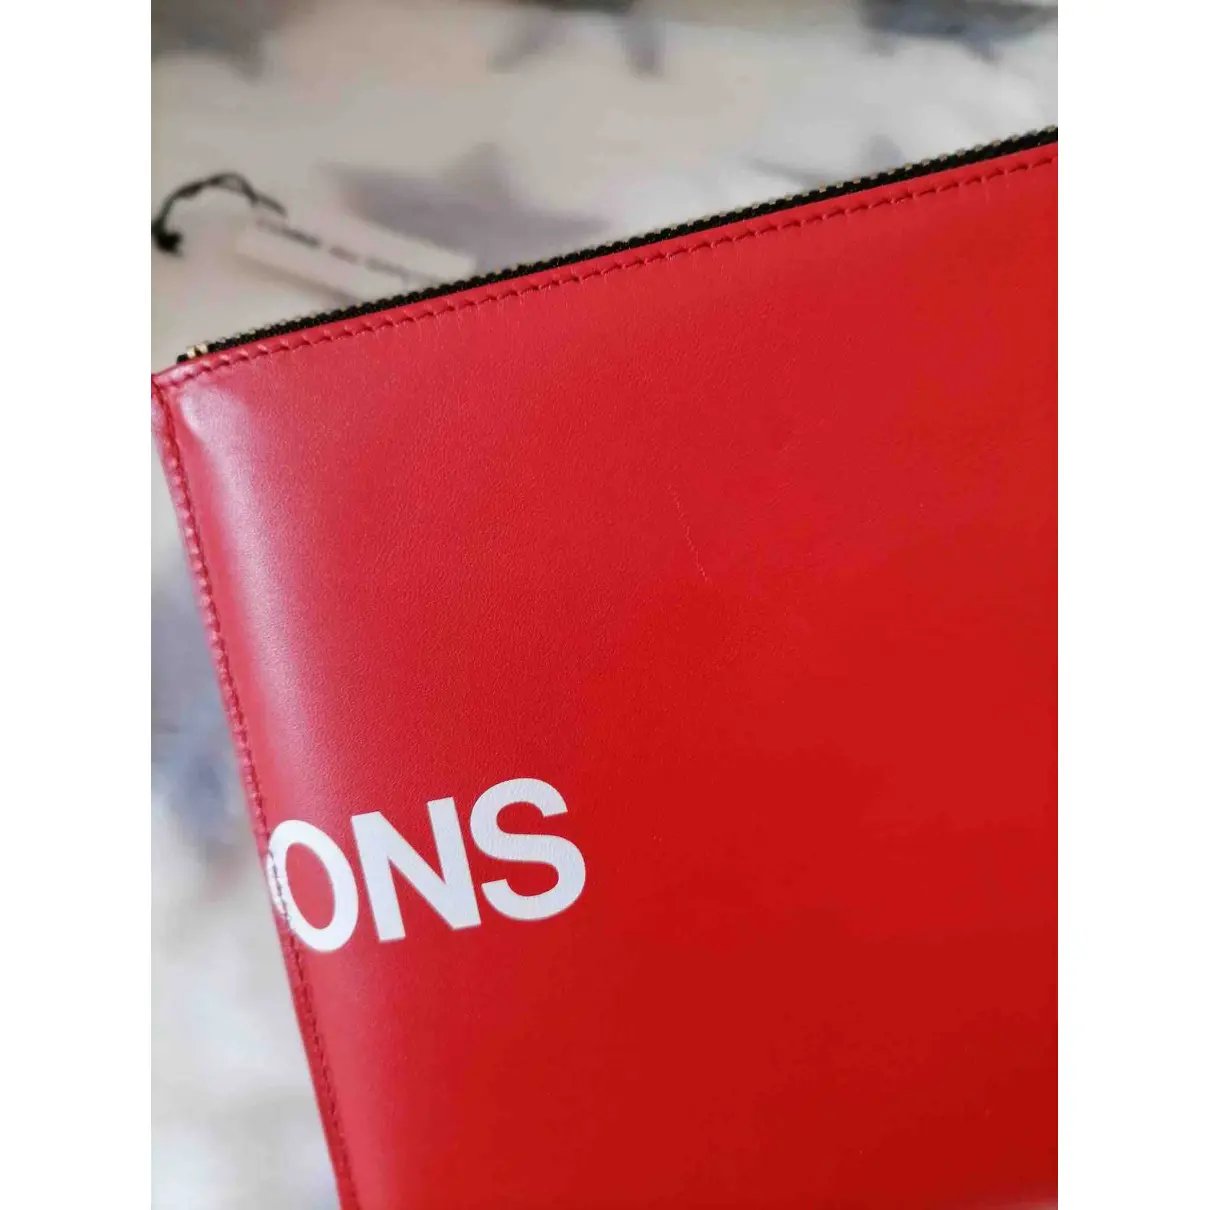 Buy Comme Des Garcons Leather clutch bag online